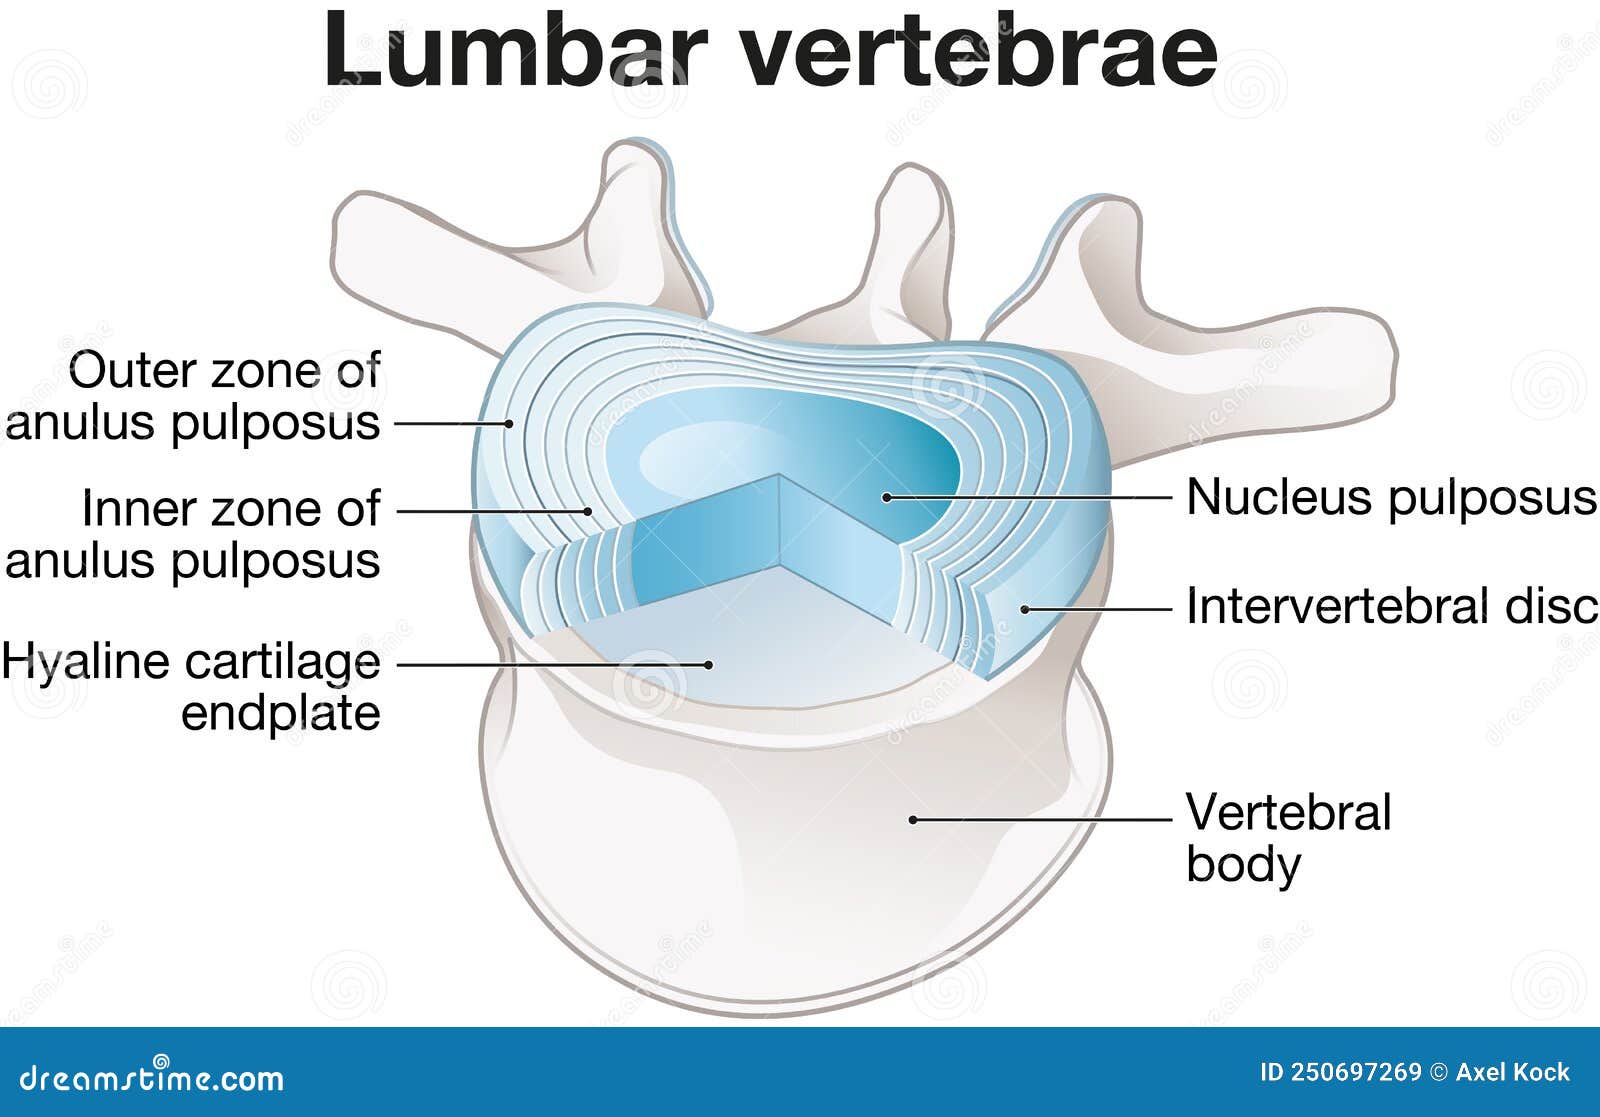 healthy lumbar vertebrae and intervertebral disc. labeled 